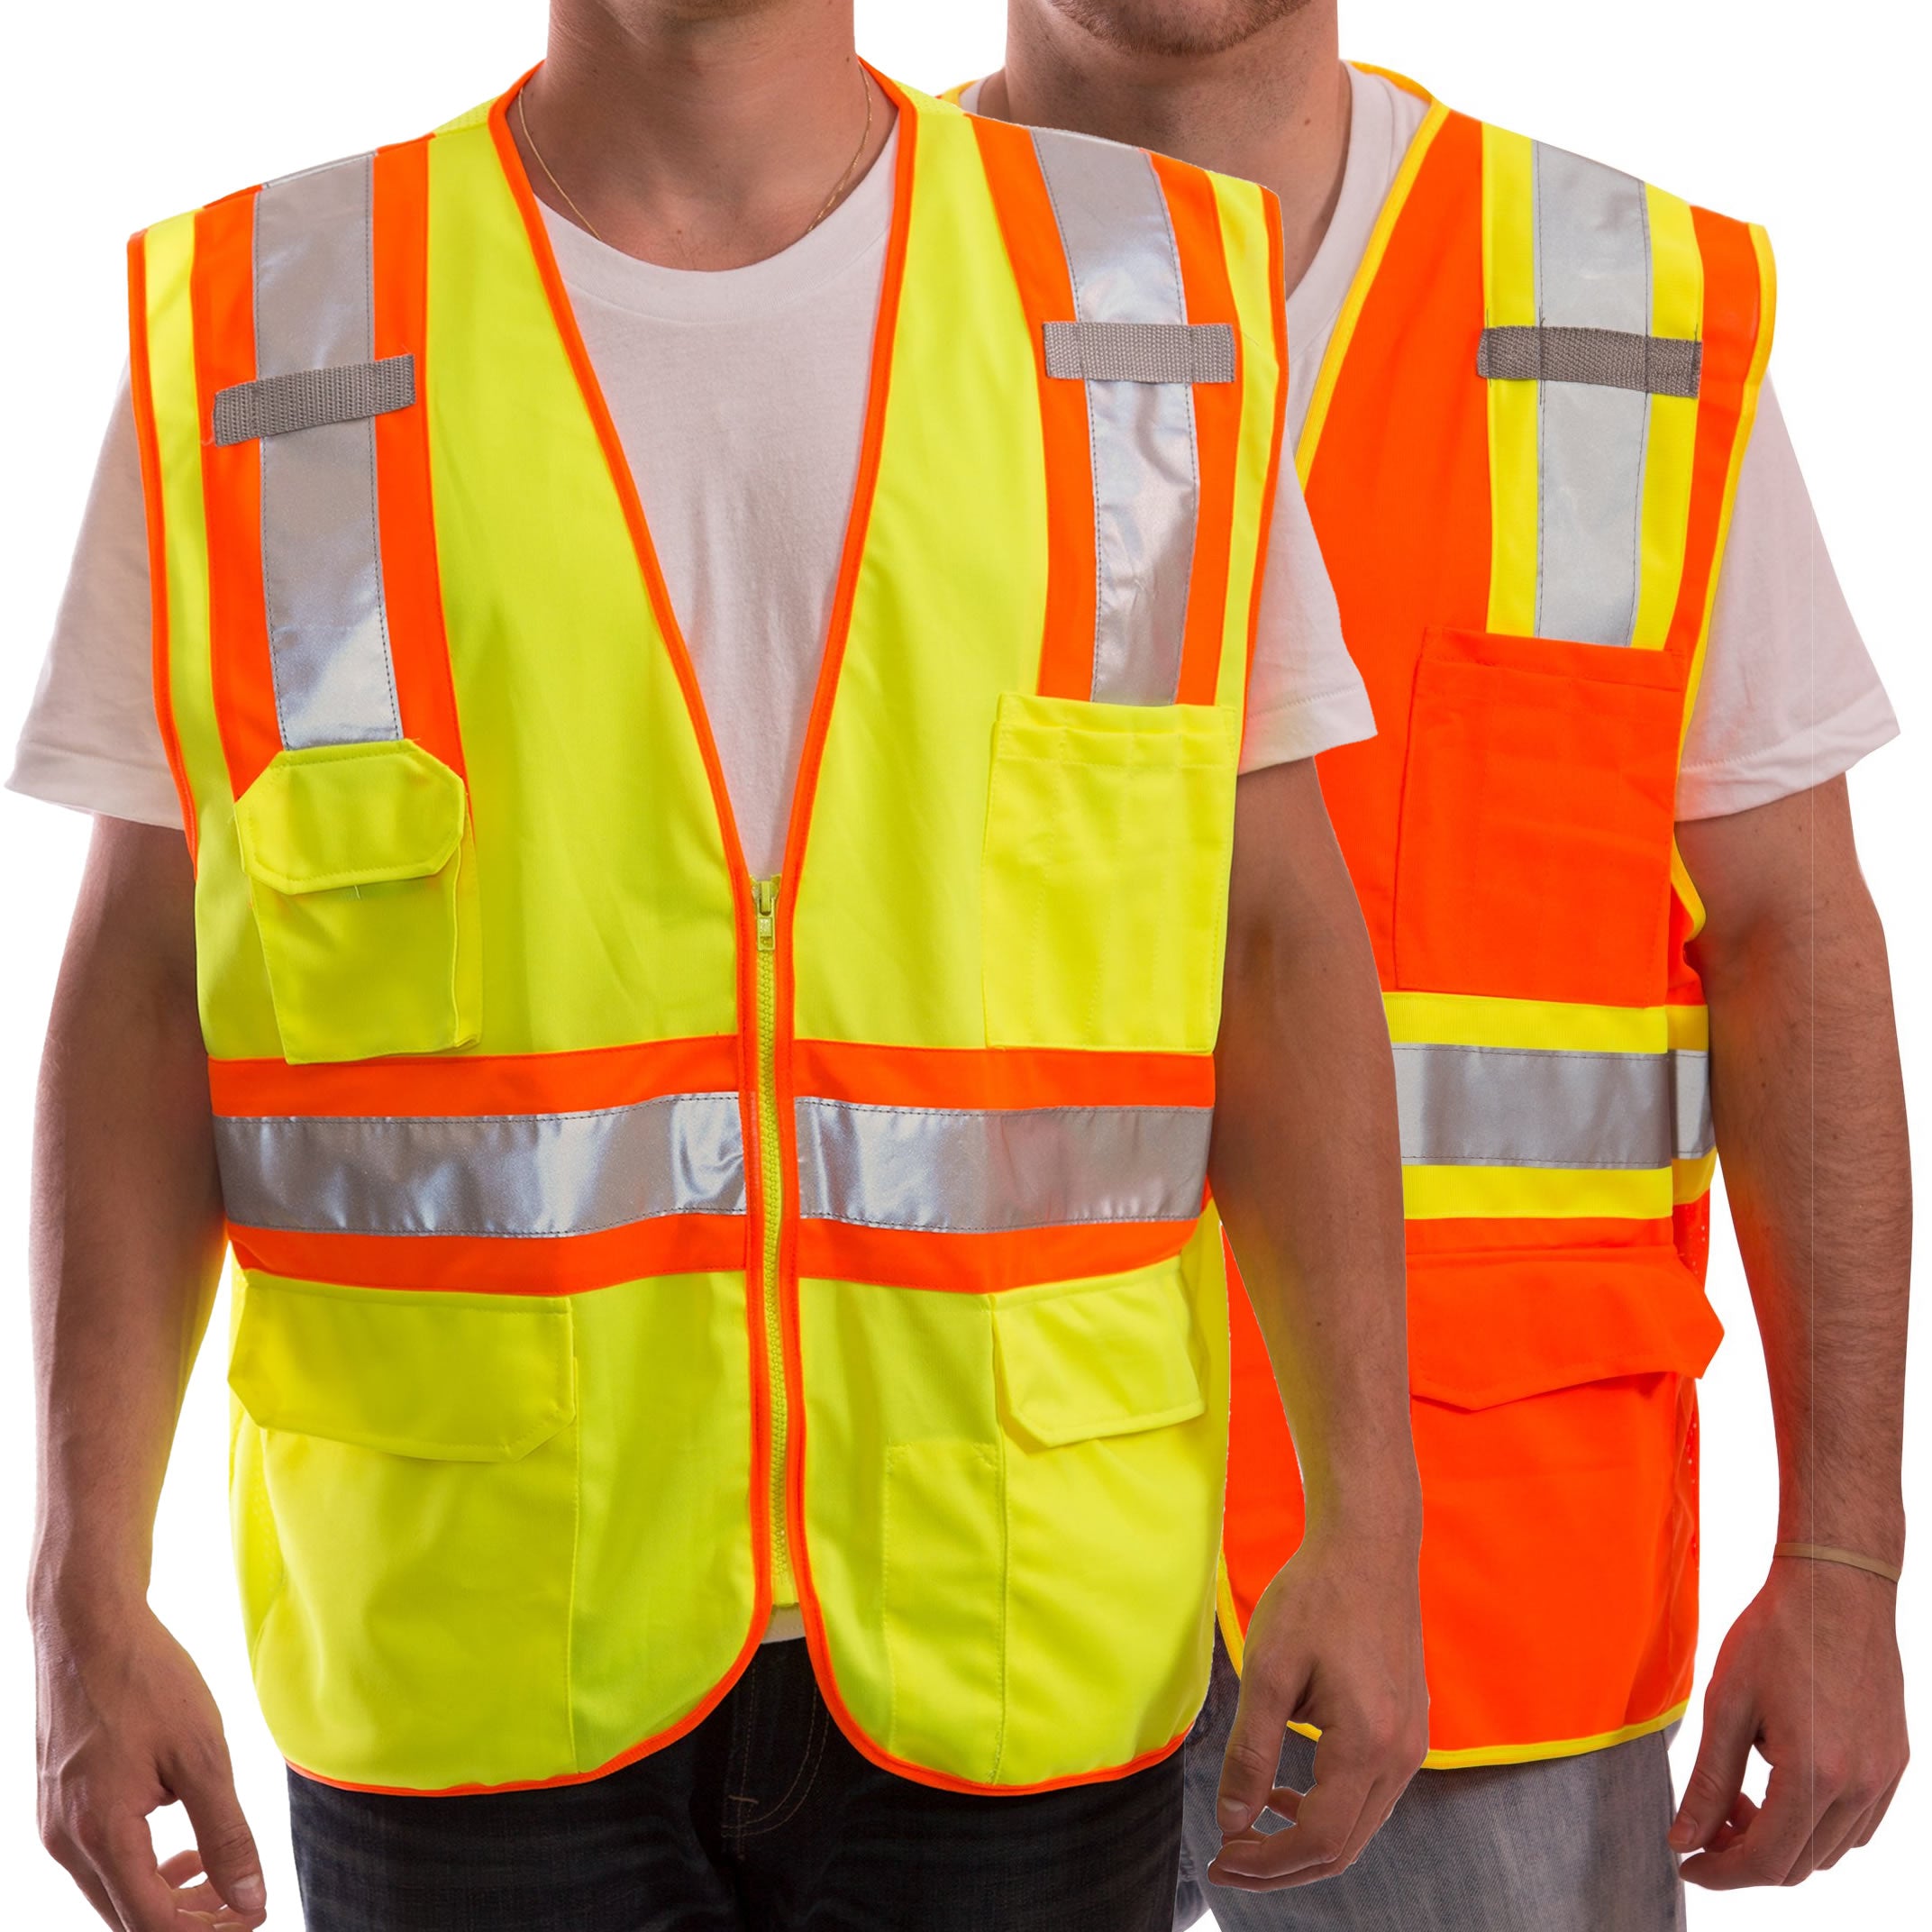 orange safety vest